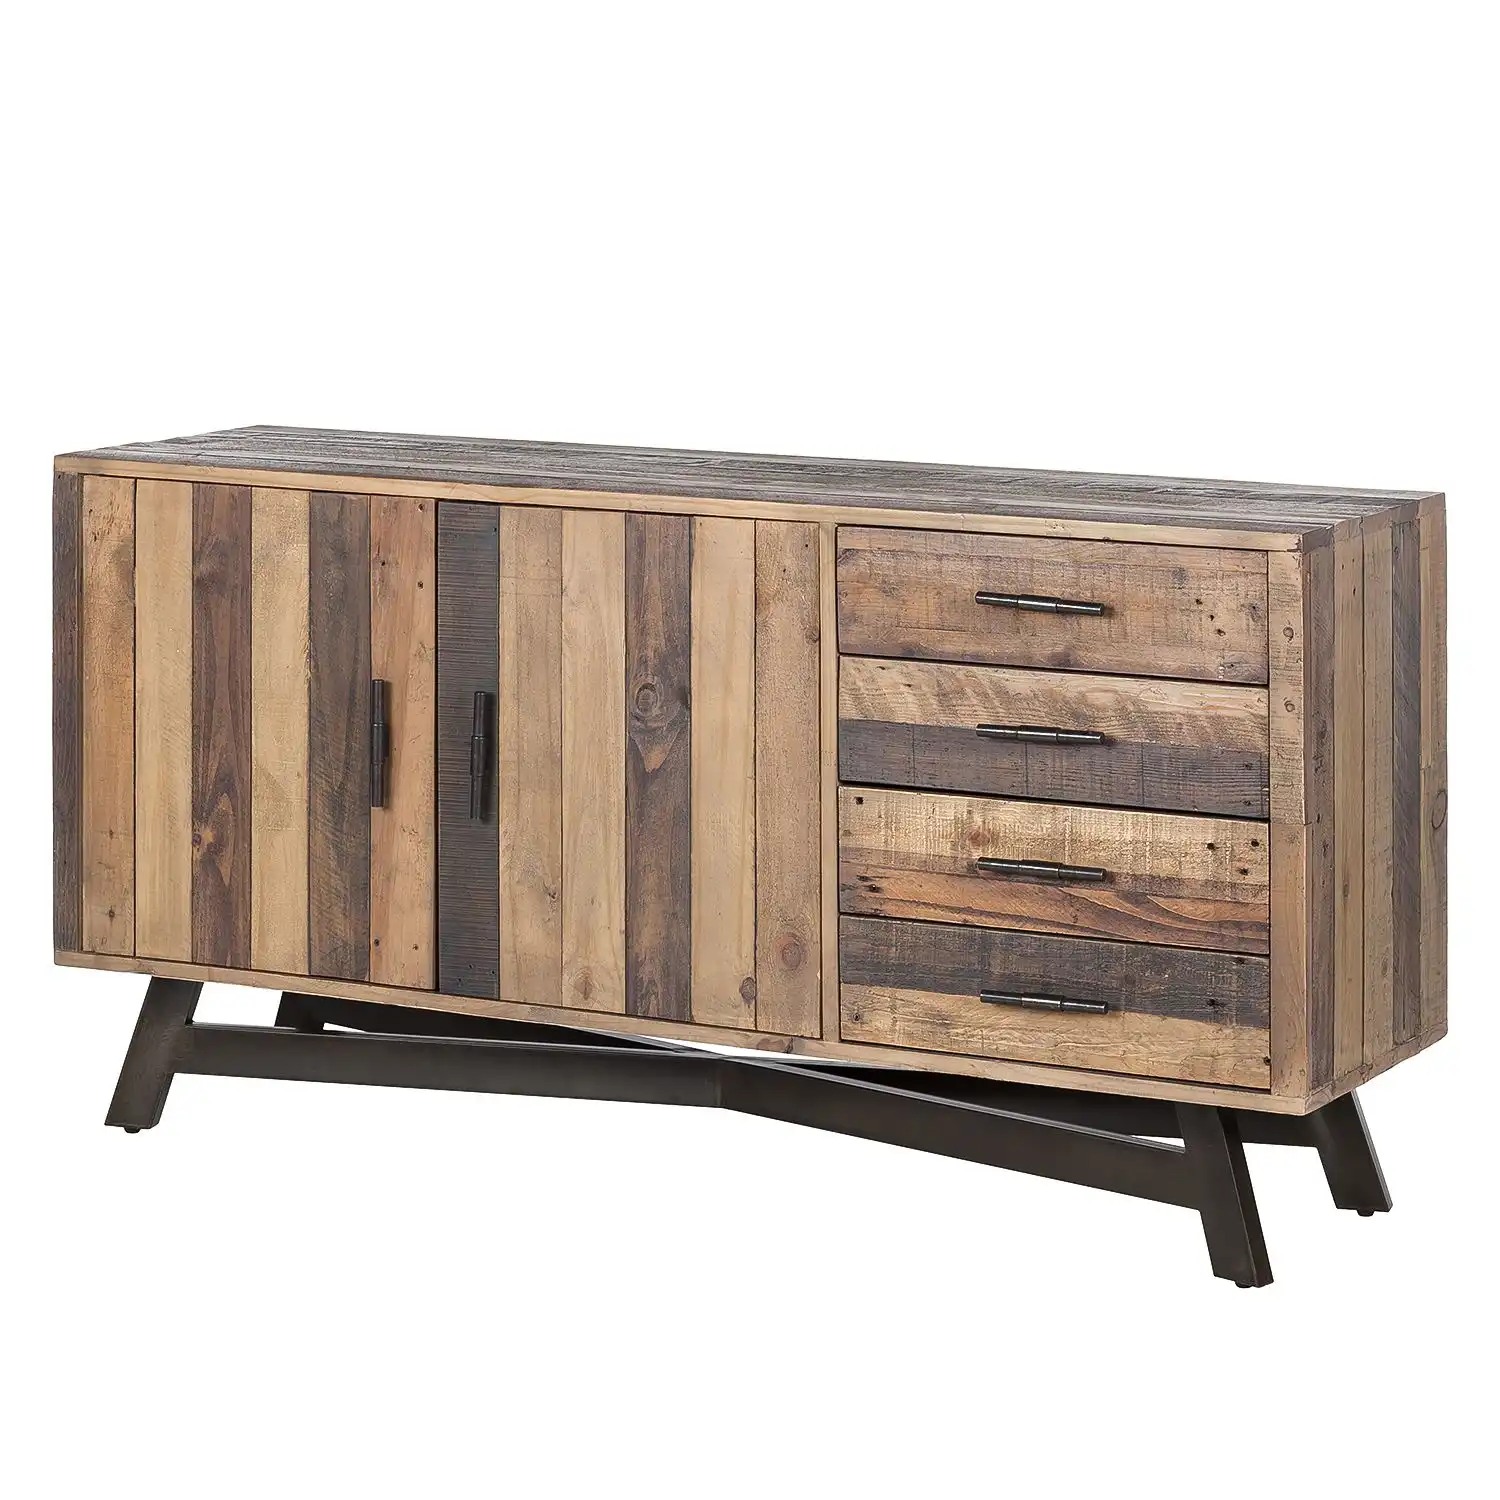 Reclaimed Wood Sideboard with 2 doors & 4 drawers - popular handicrafts